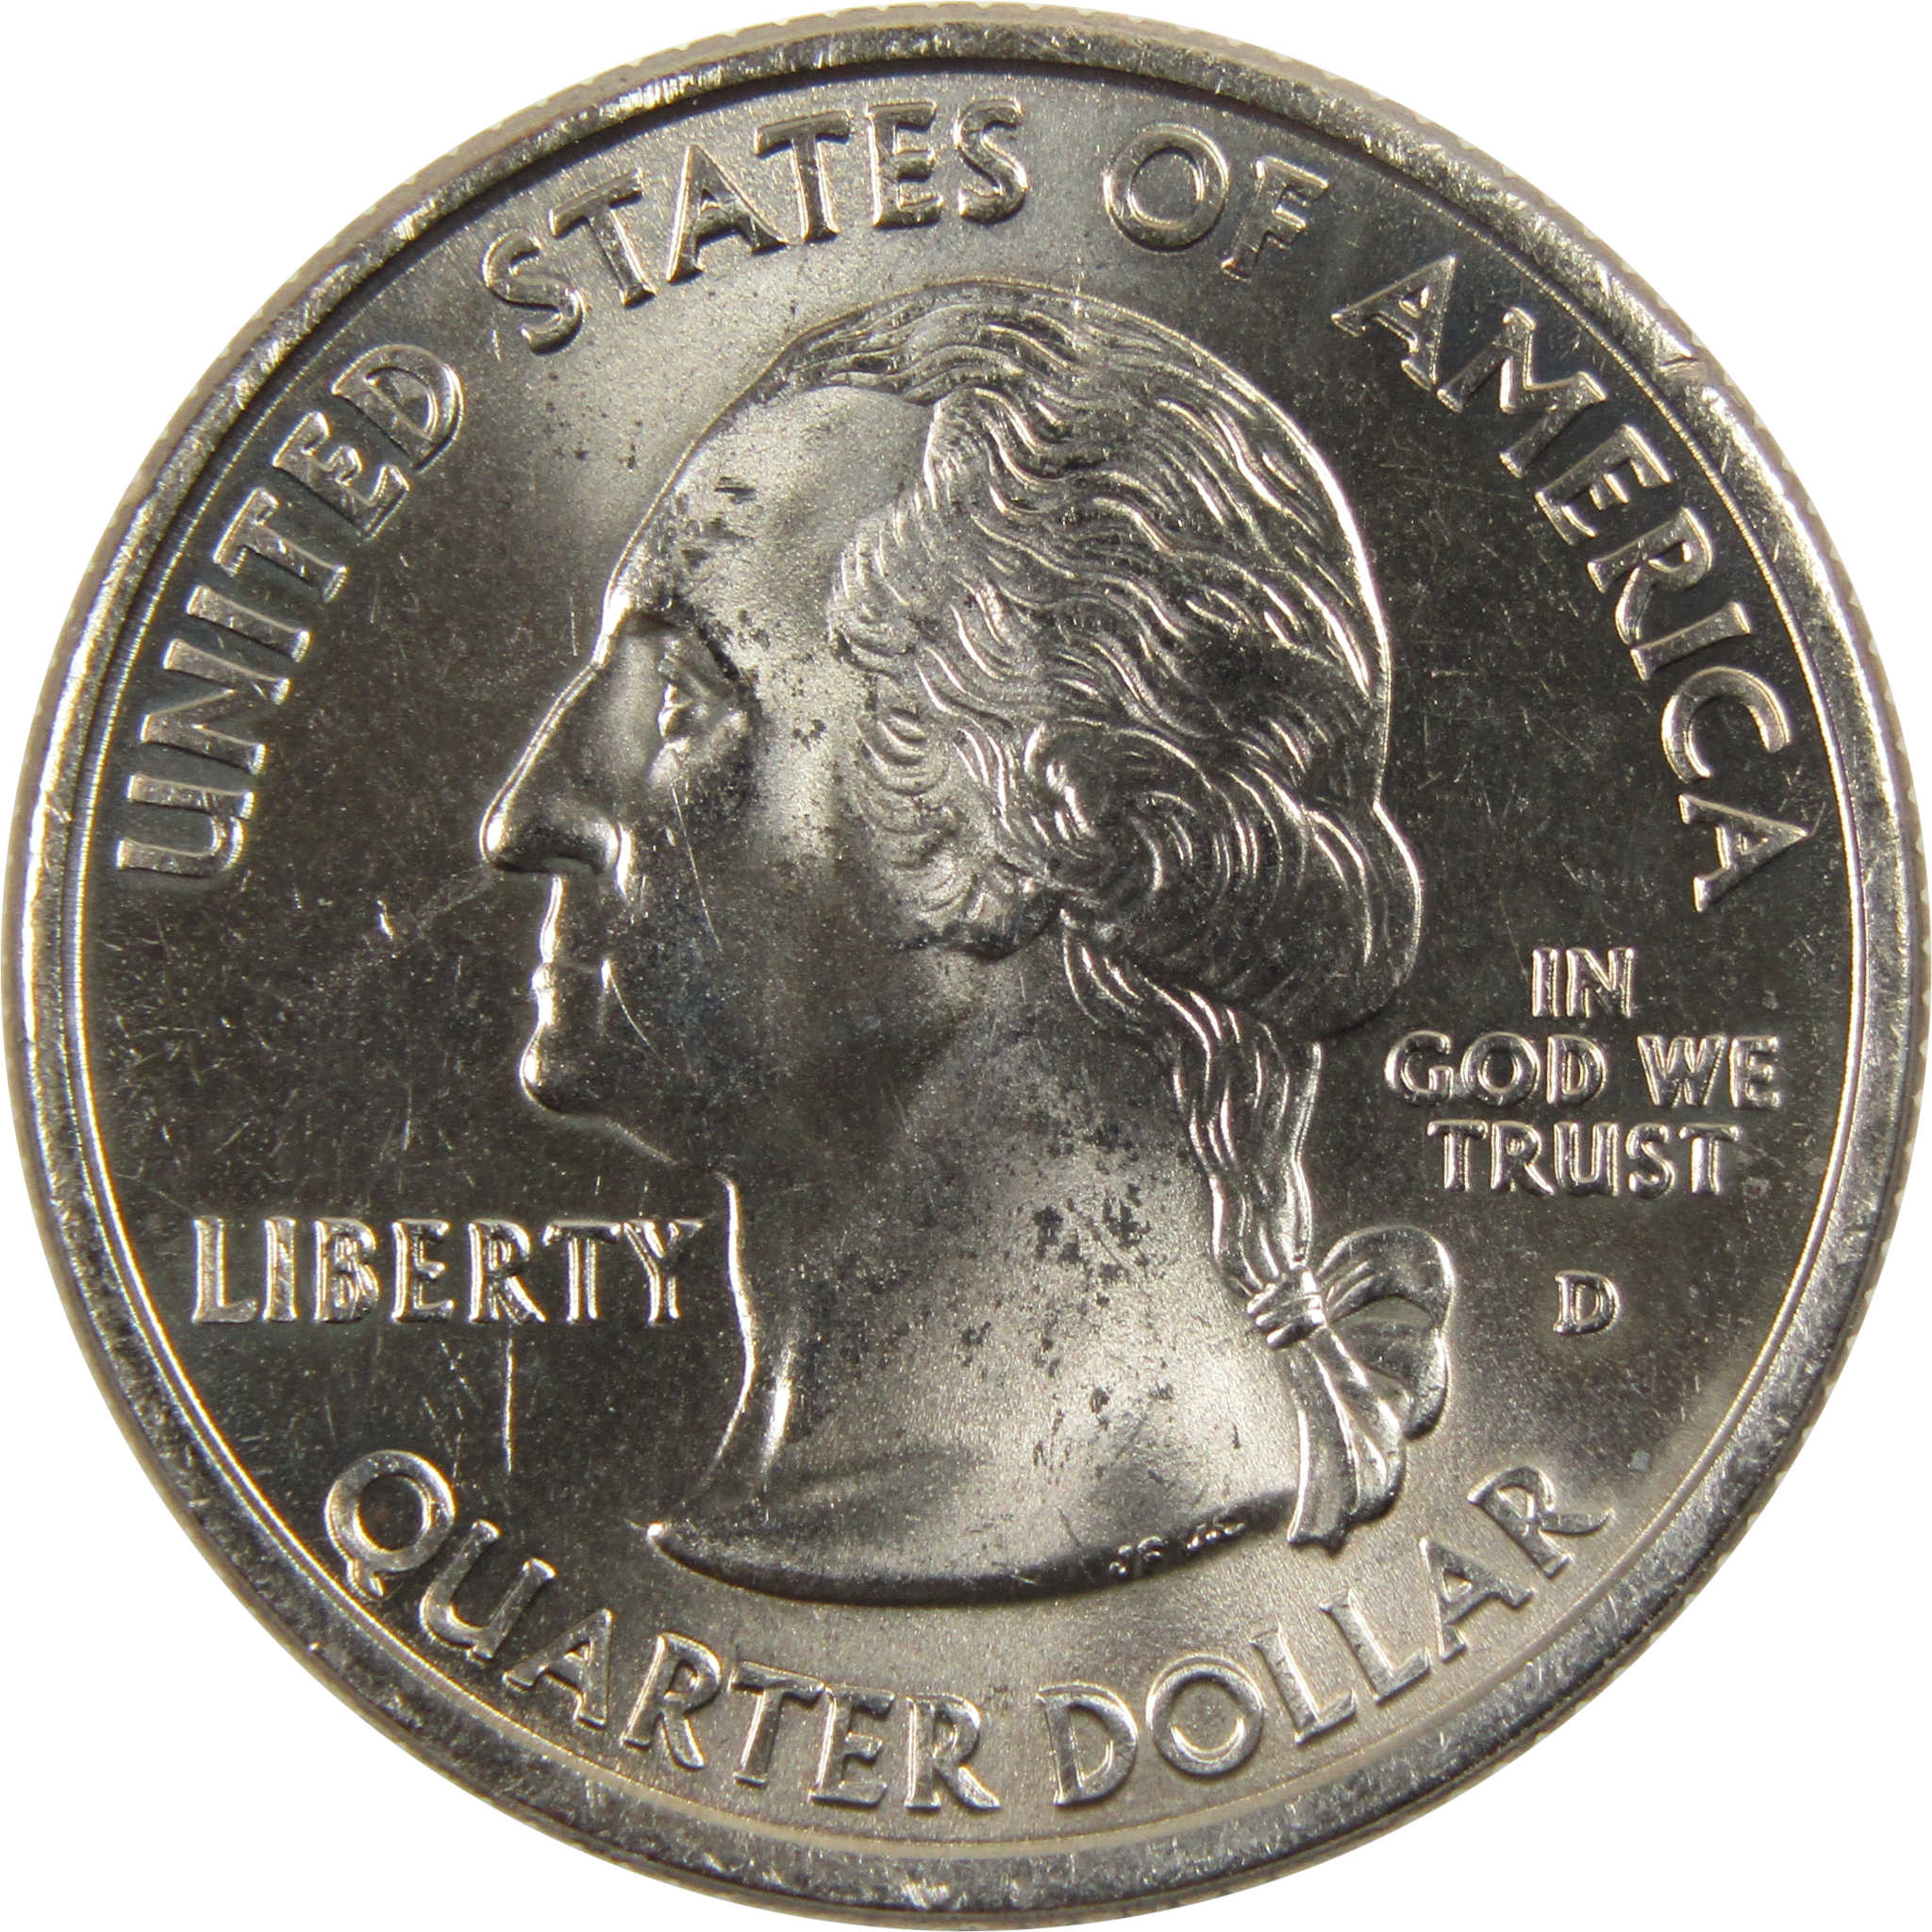 2002 D Ohio State Quarter BU Uncirculated Clad 25c Coin